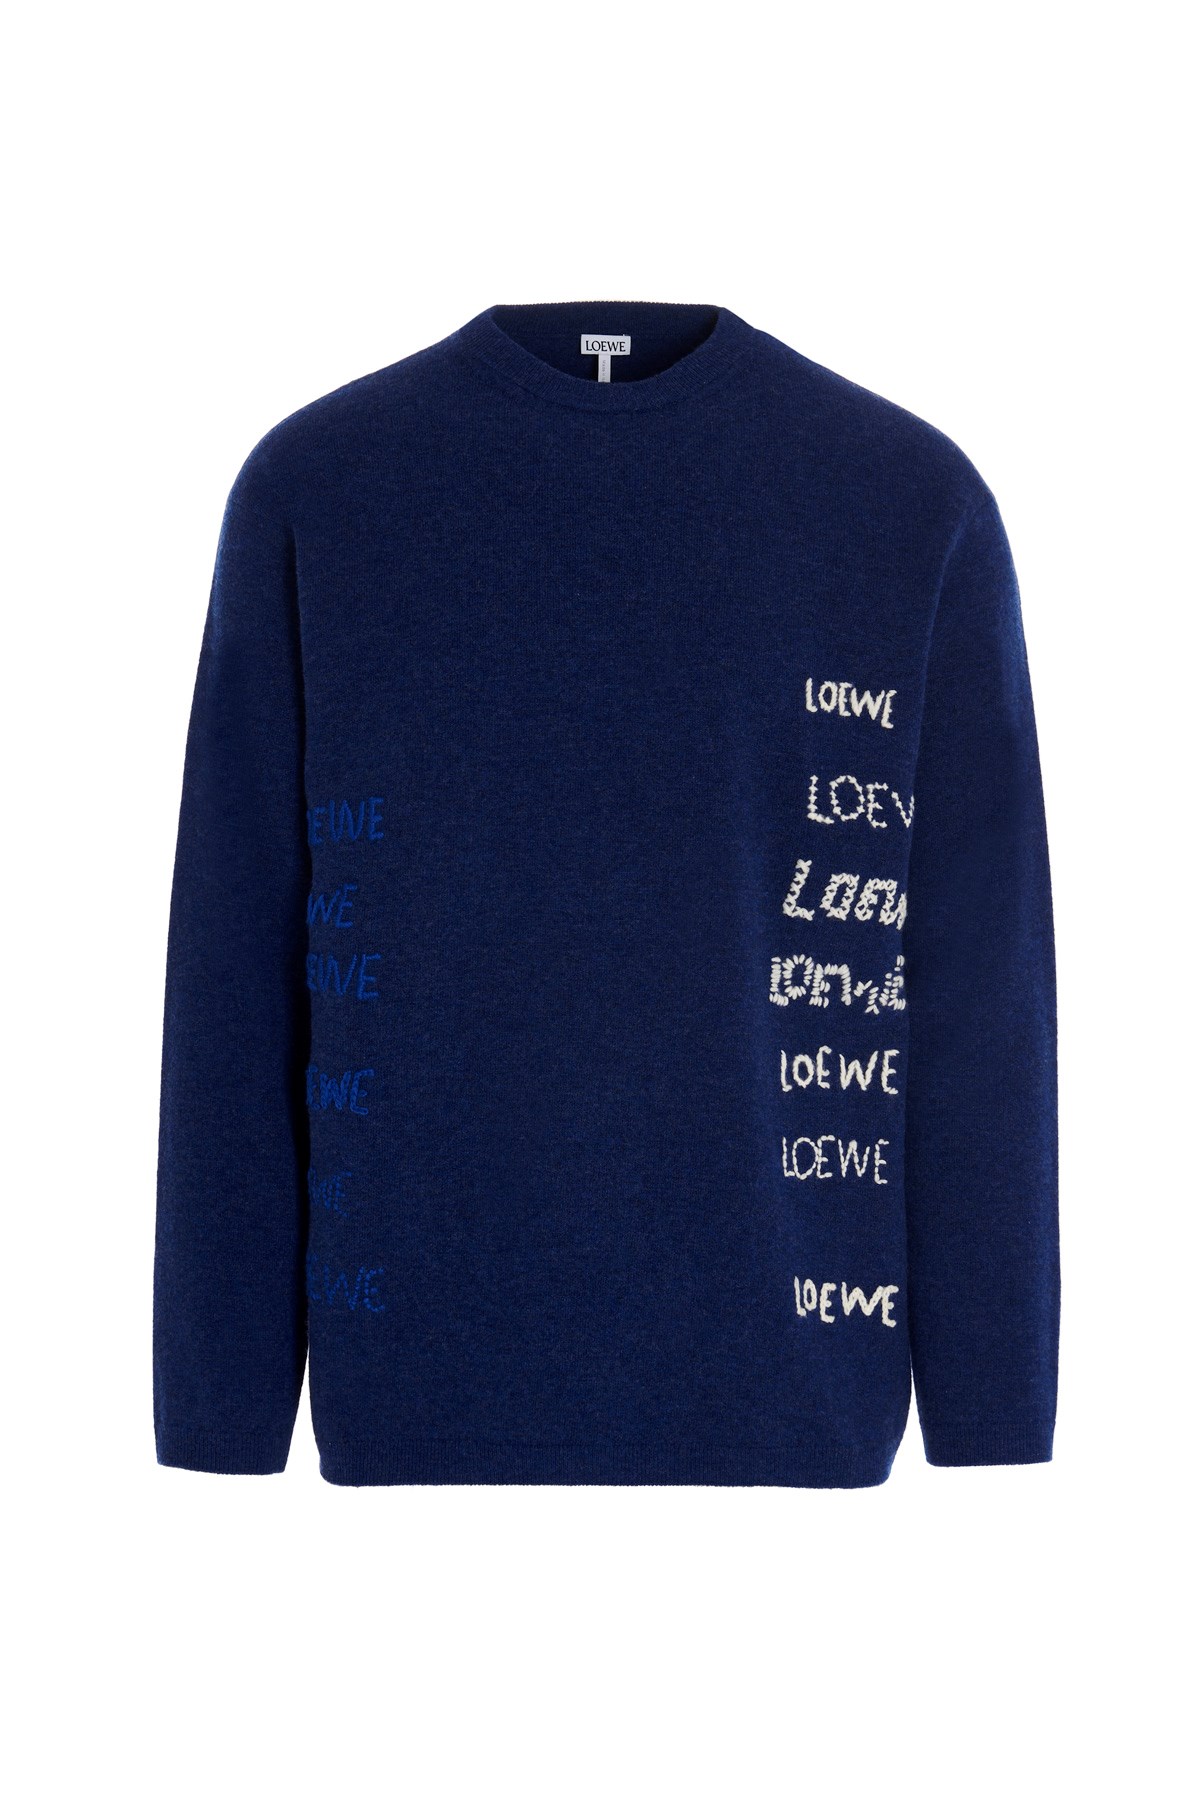 LOEWE 'Embroidered Sweater’ Sweater